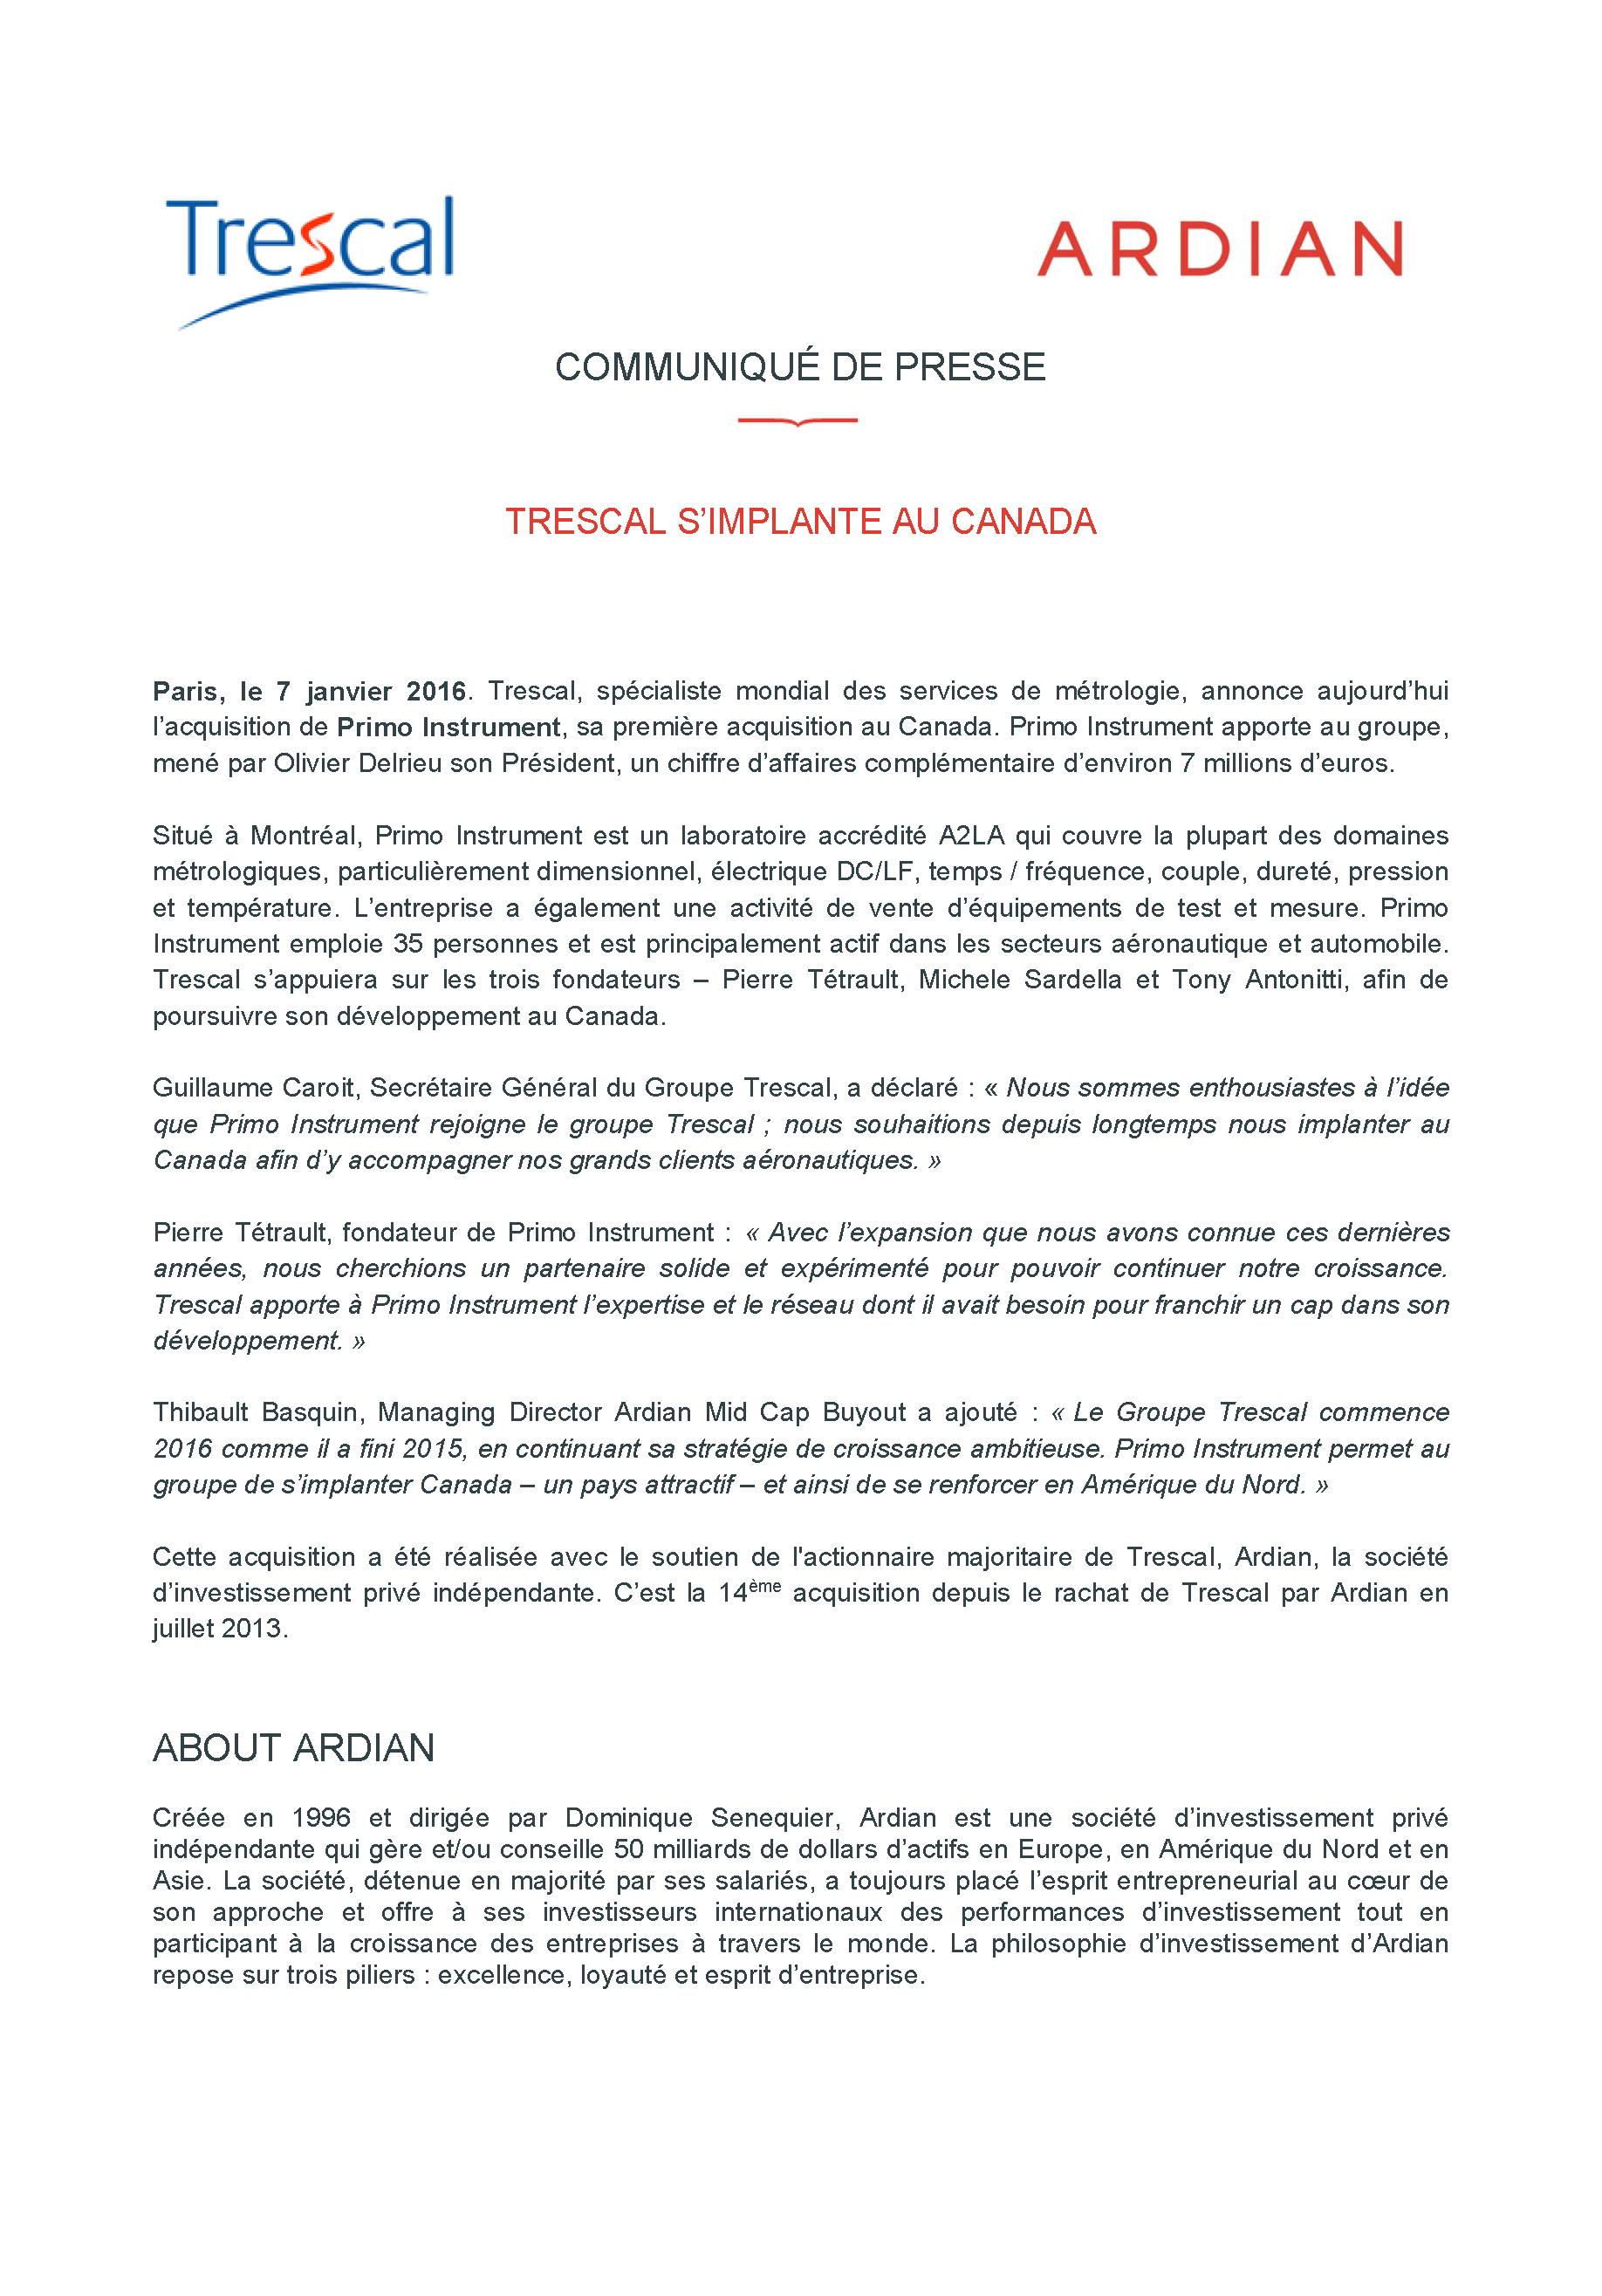 Trescal s'implante au Canada